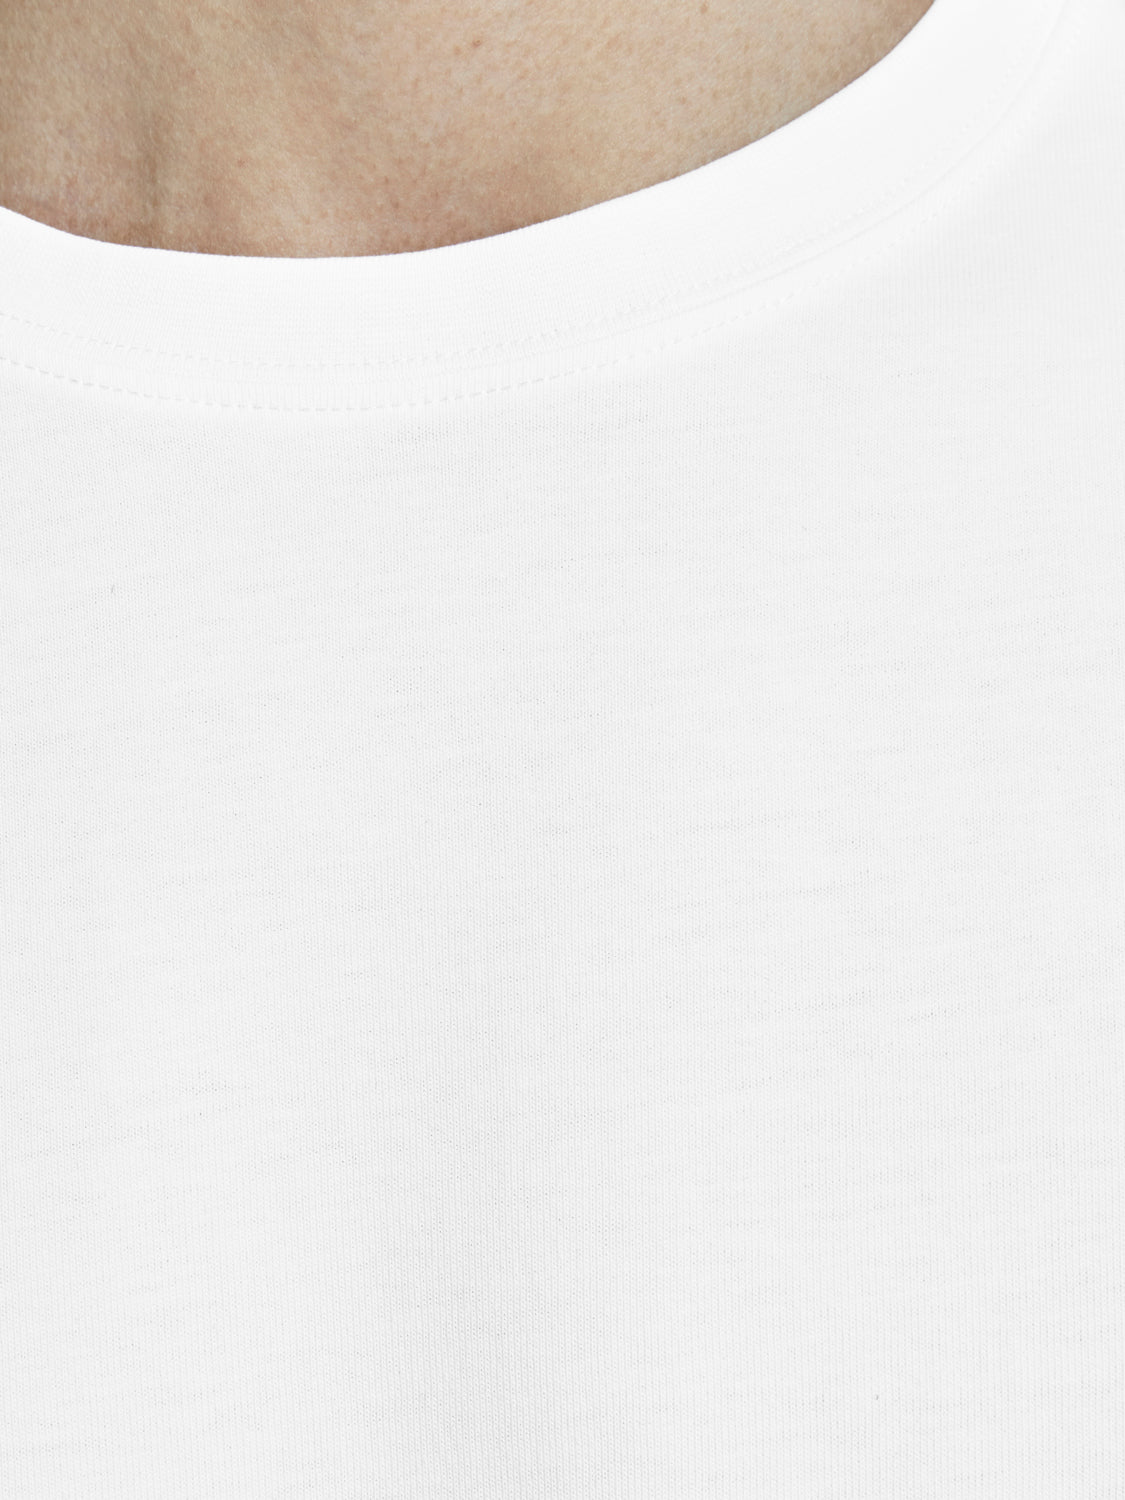 JJERELAXED T-Shirt - White